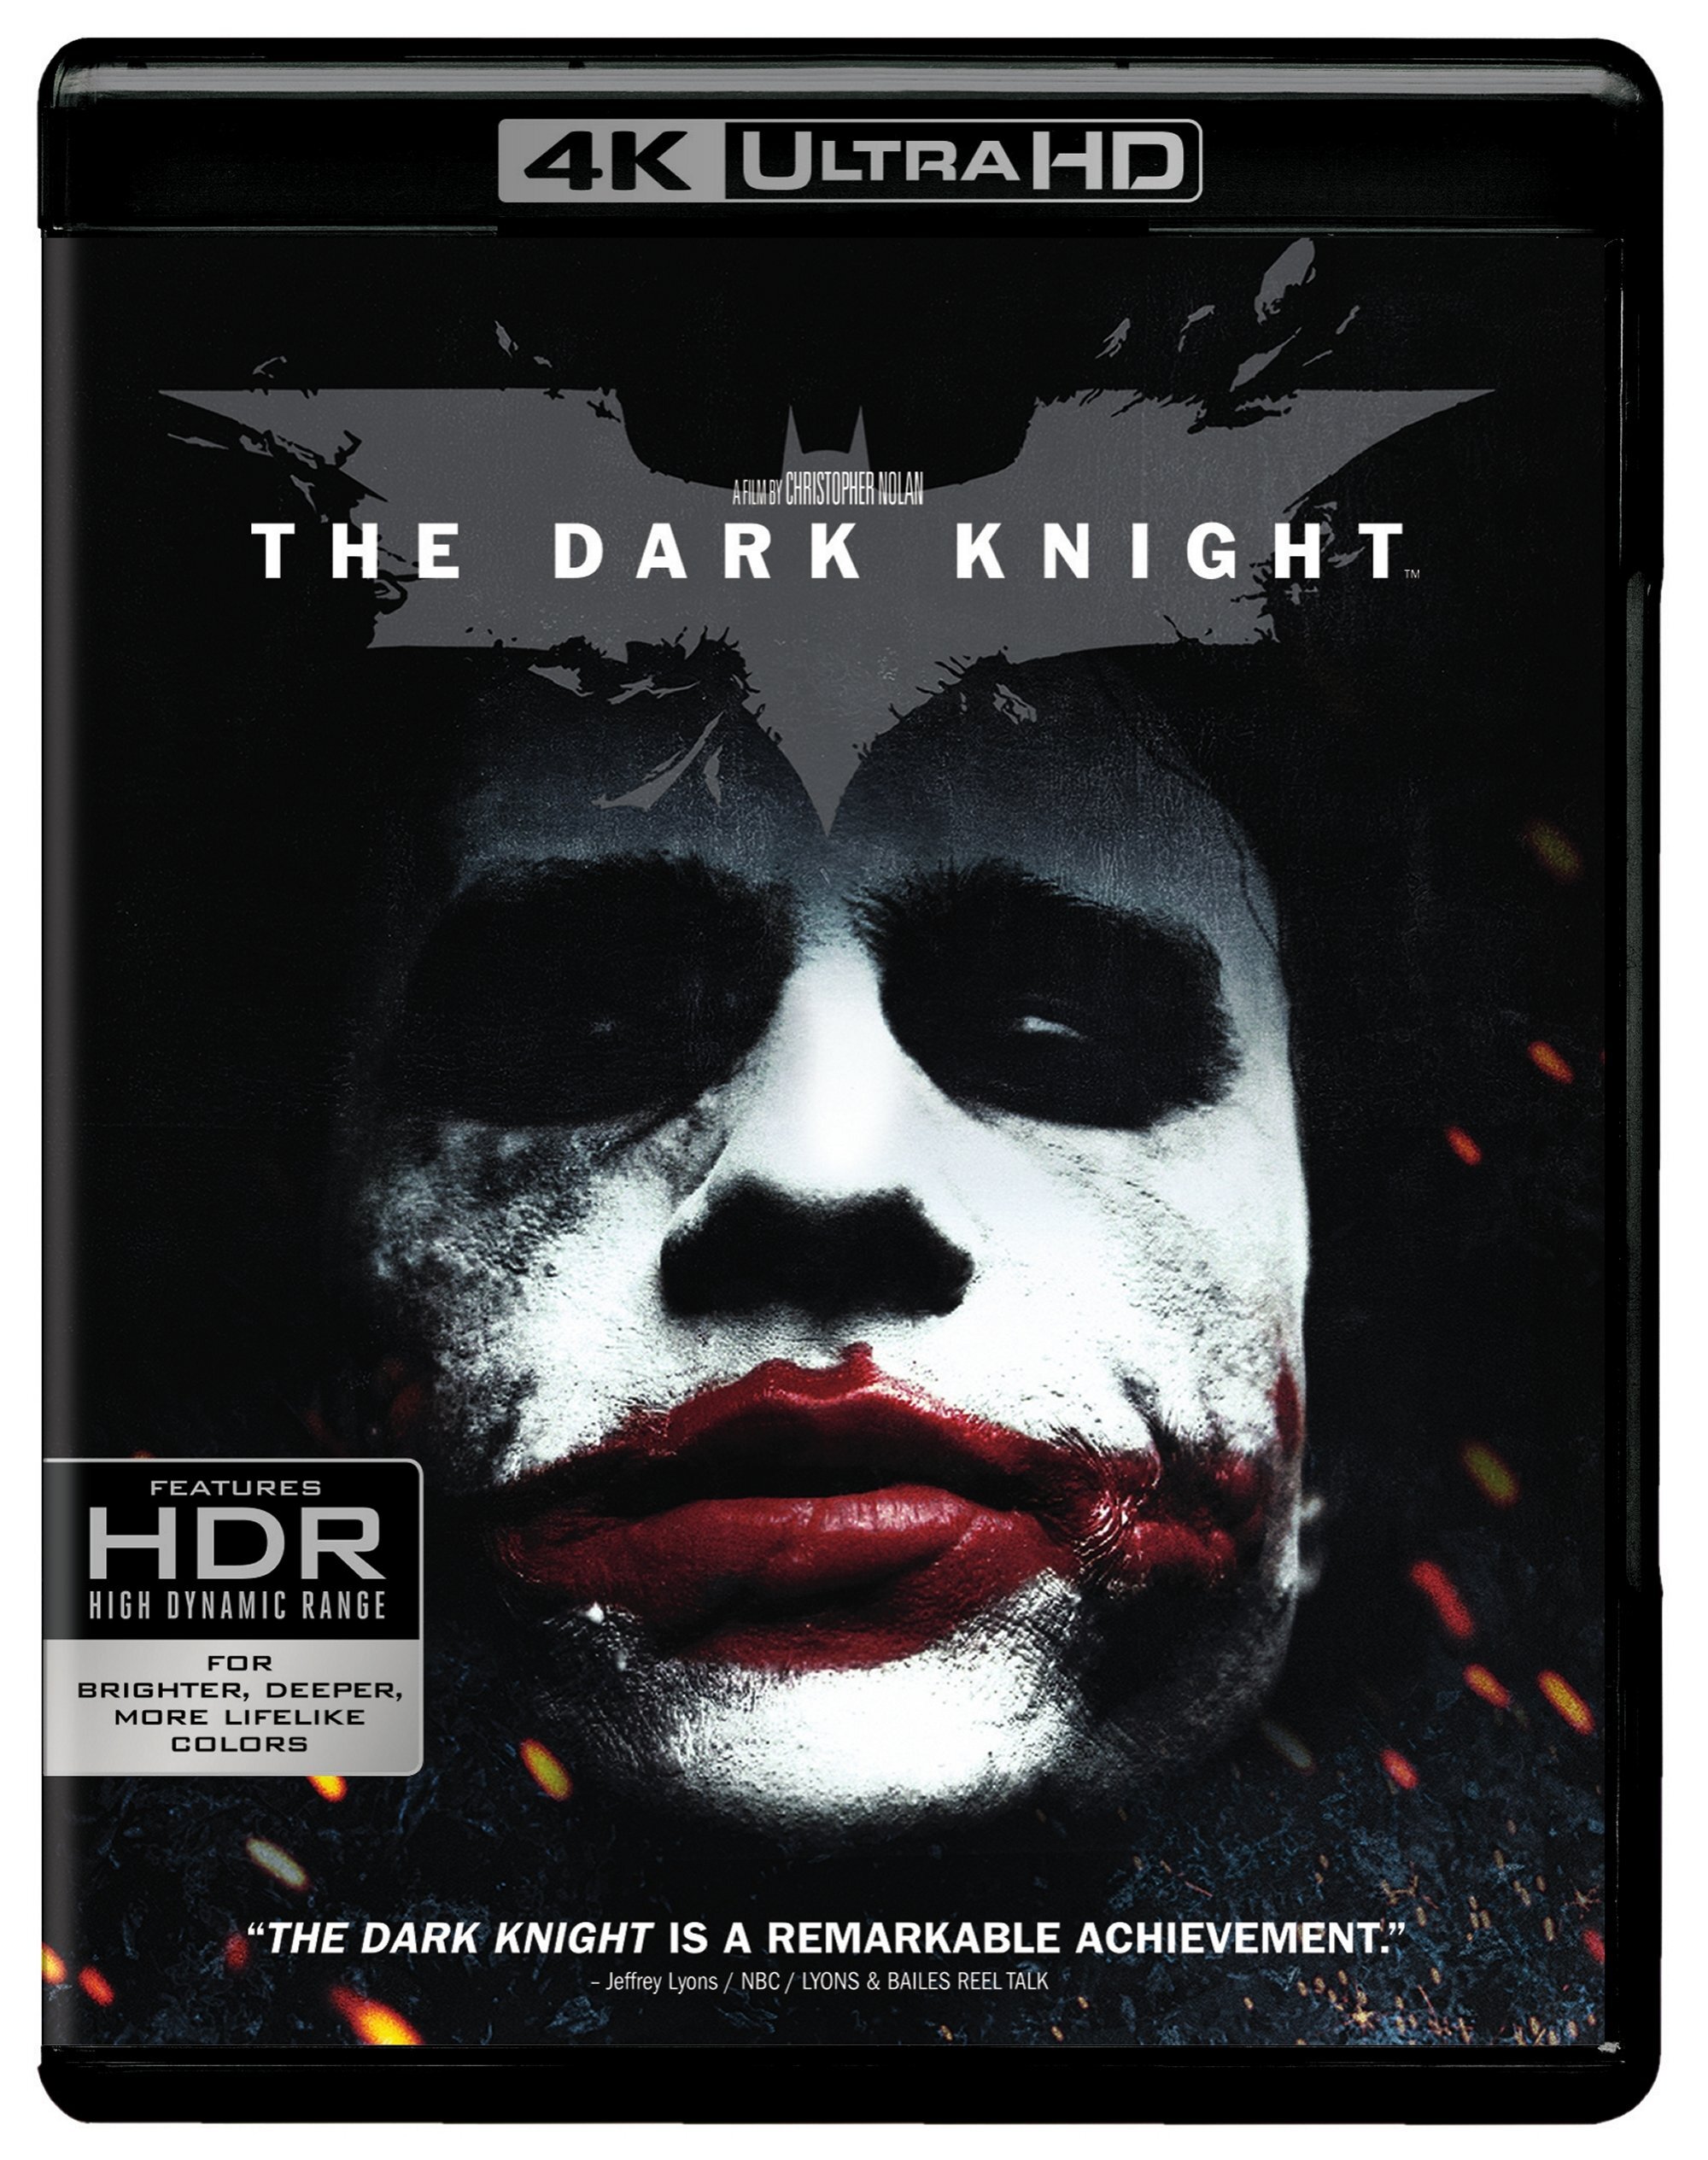 The Dark Knight (4K Ultra HD + Blu-ray) - UHD [ 2008 ]  - Action Movies On 4K Ultra HD Blu-ray - Movies On GRUV